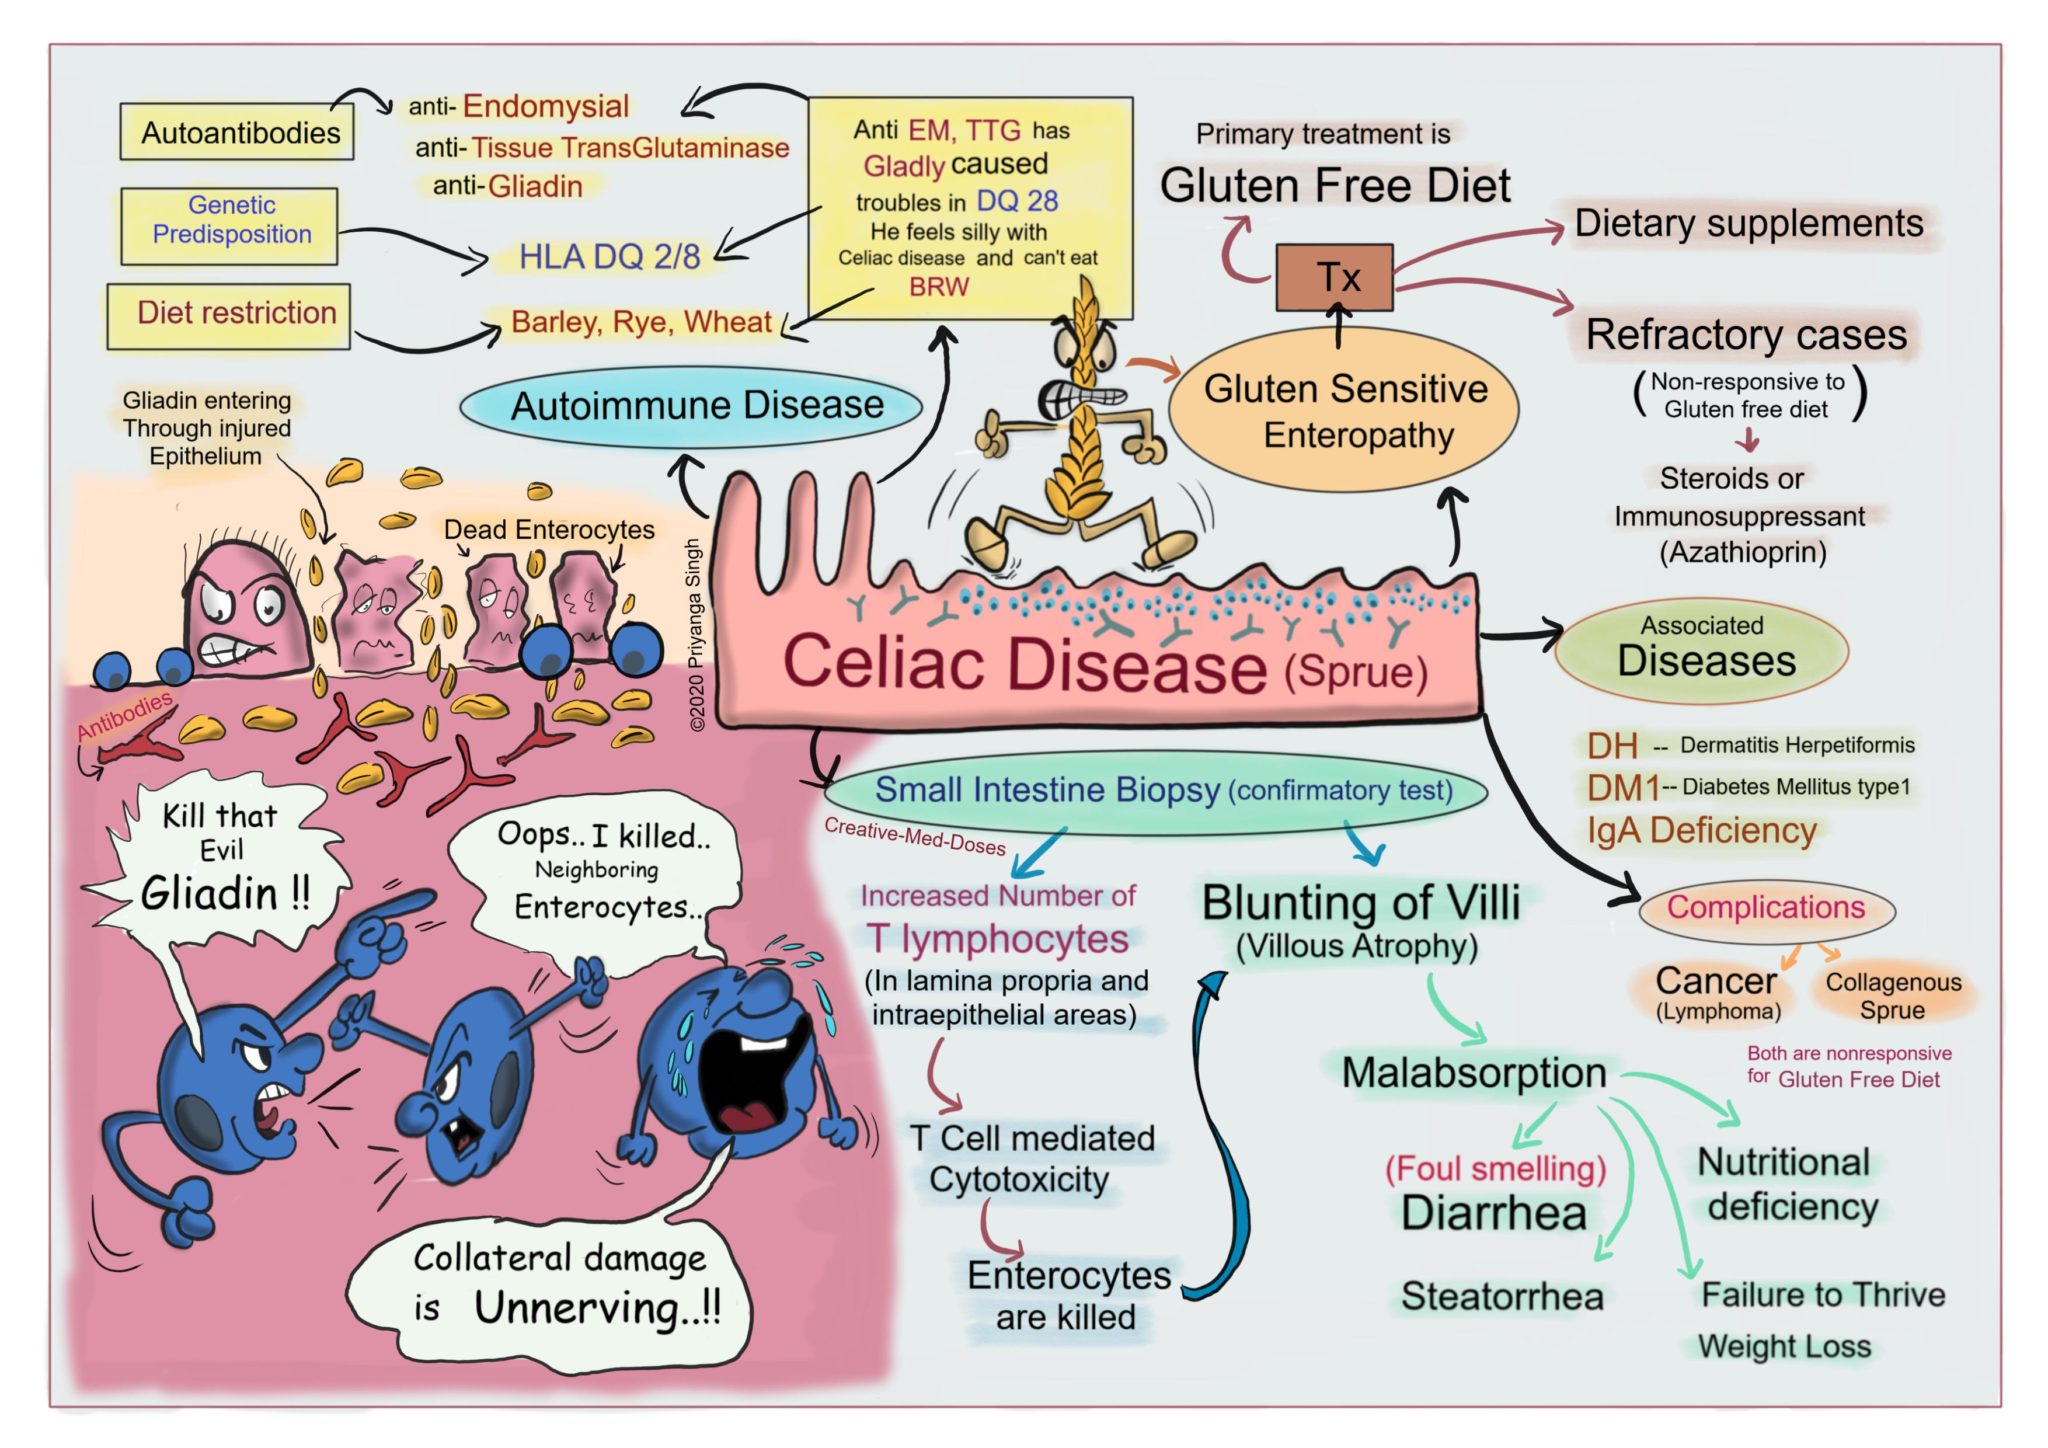 celiac-disease-gluten-intolerance-creative-med-doses